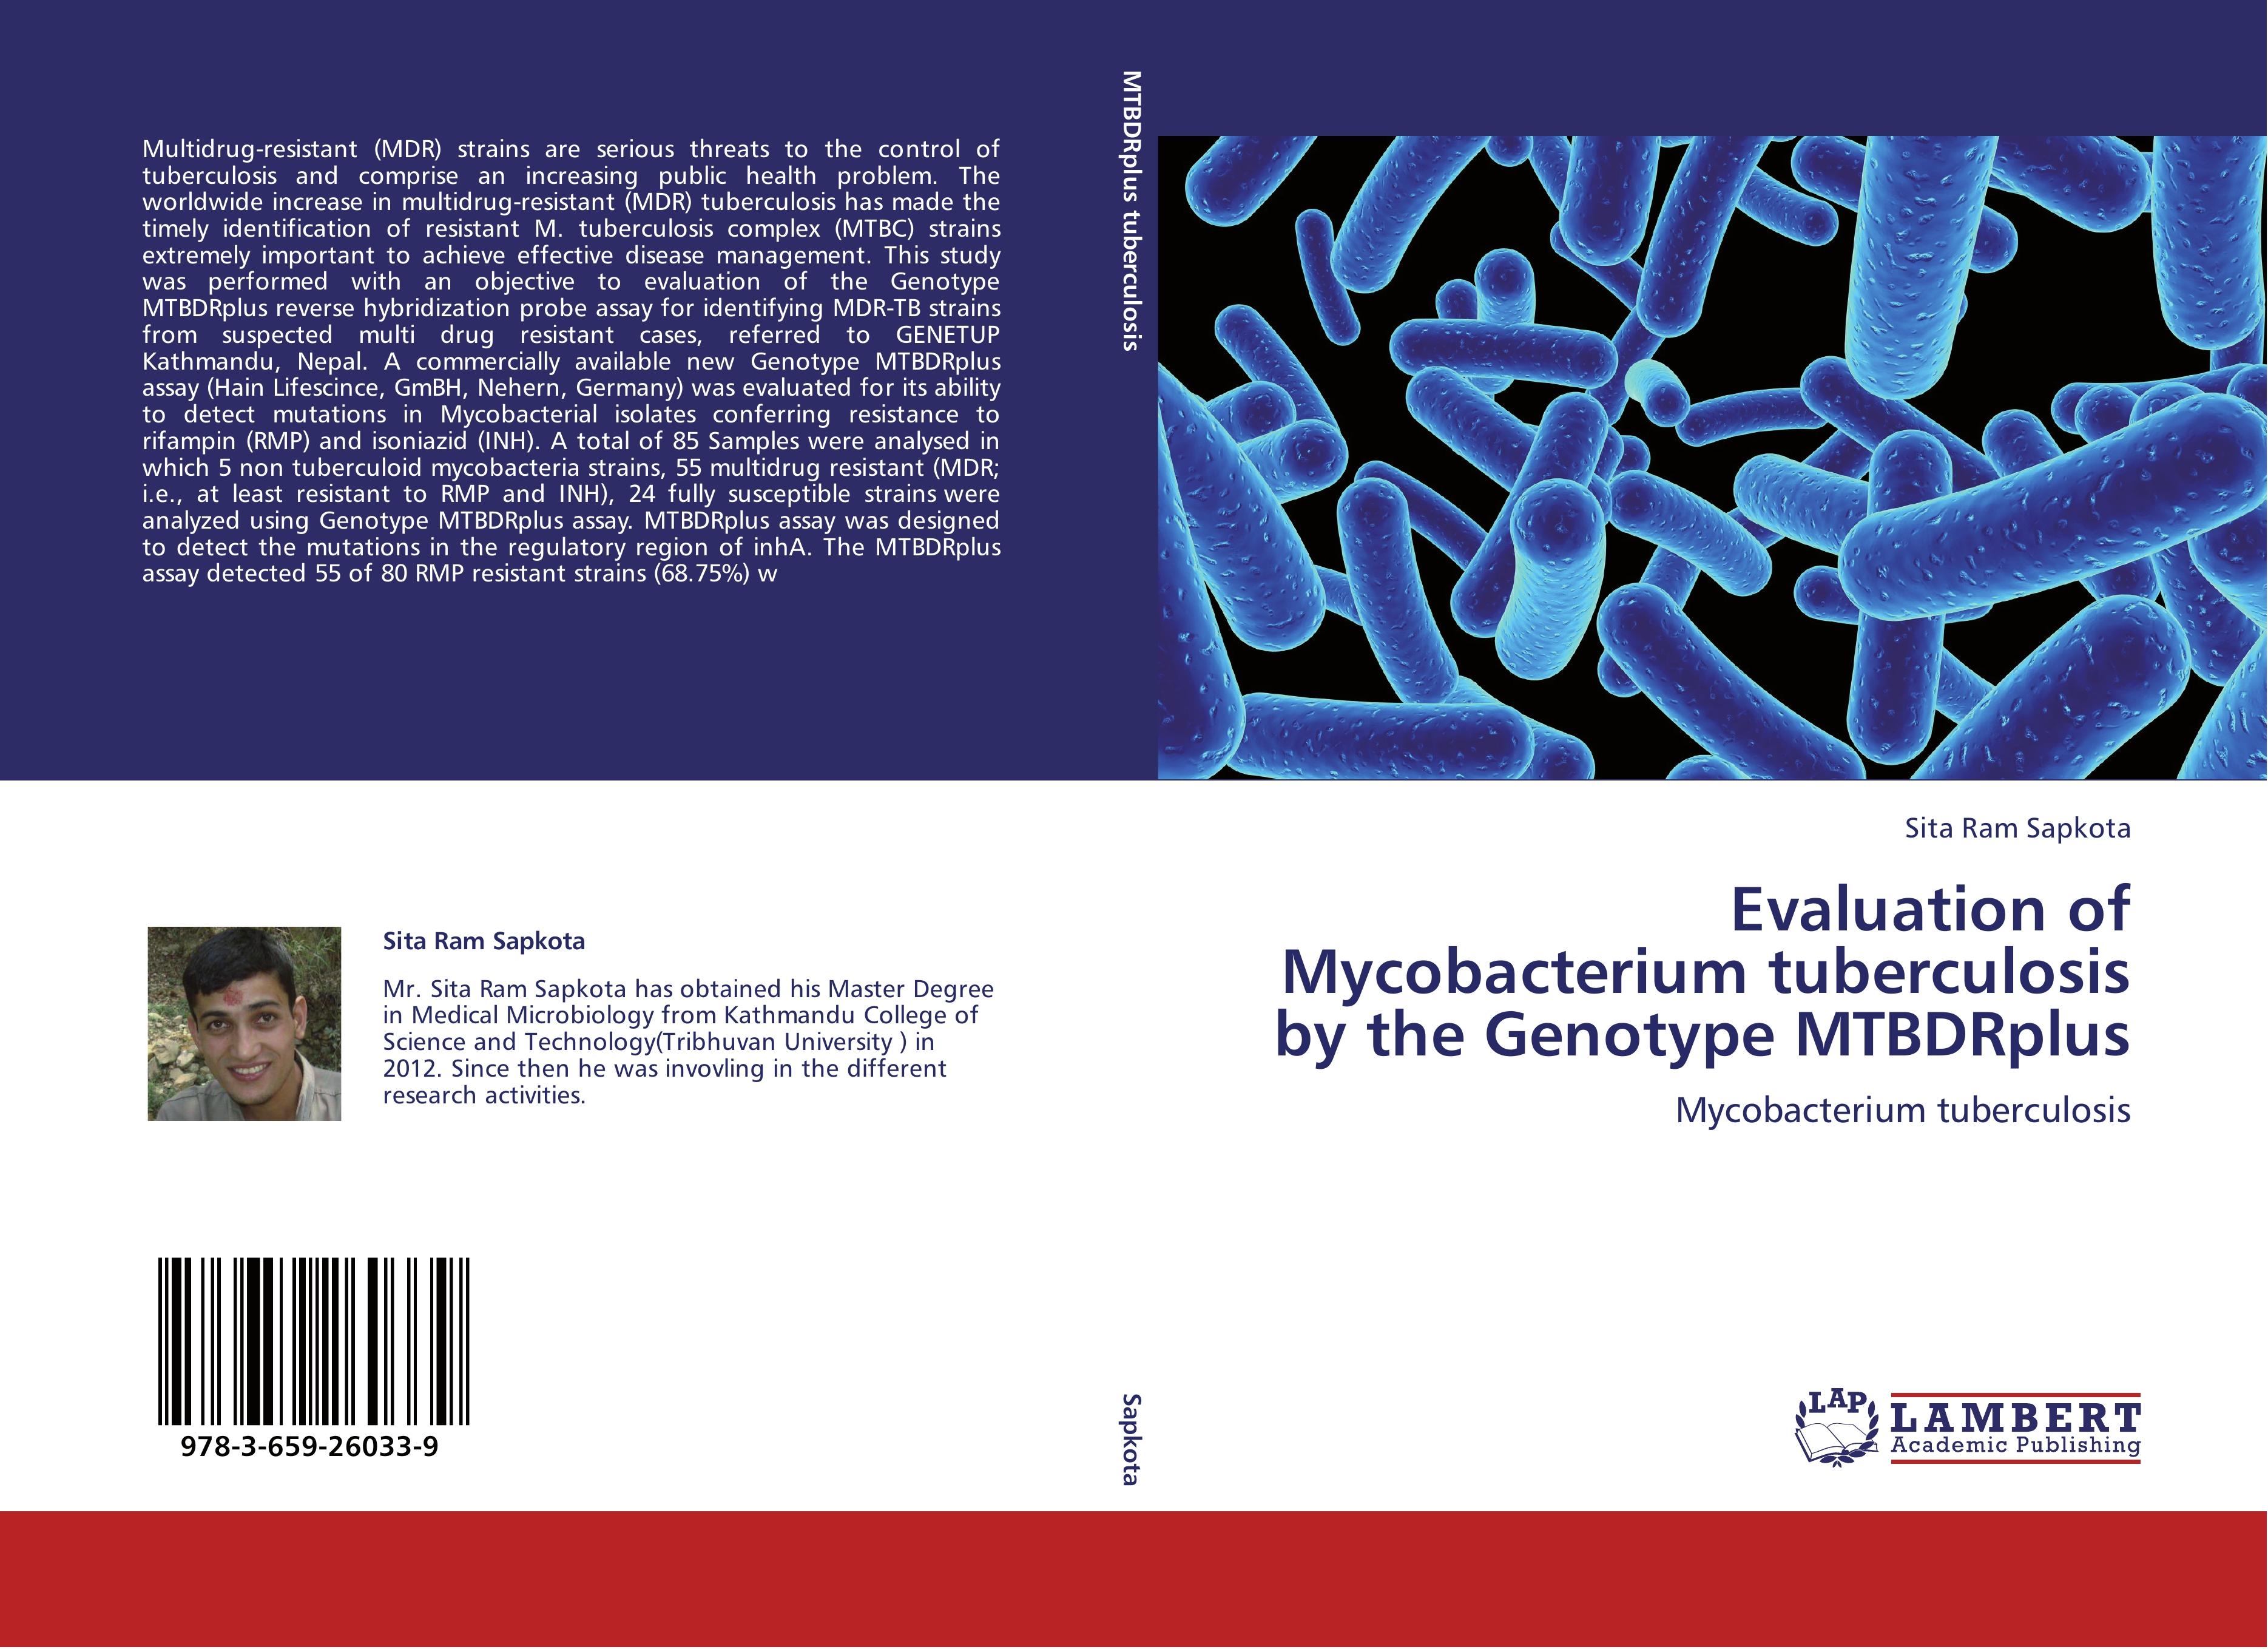 Evaluation of Mycobacterium tuberculosis by the Genotype MTBDRplus - Sita Ram Sapkota